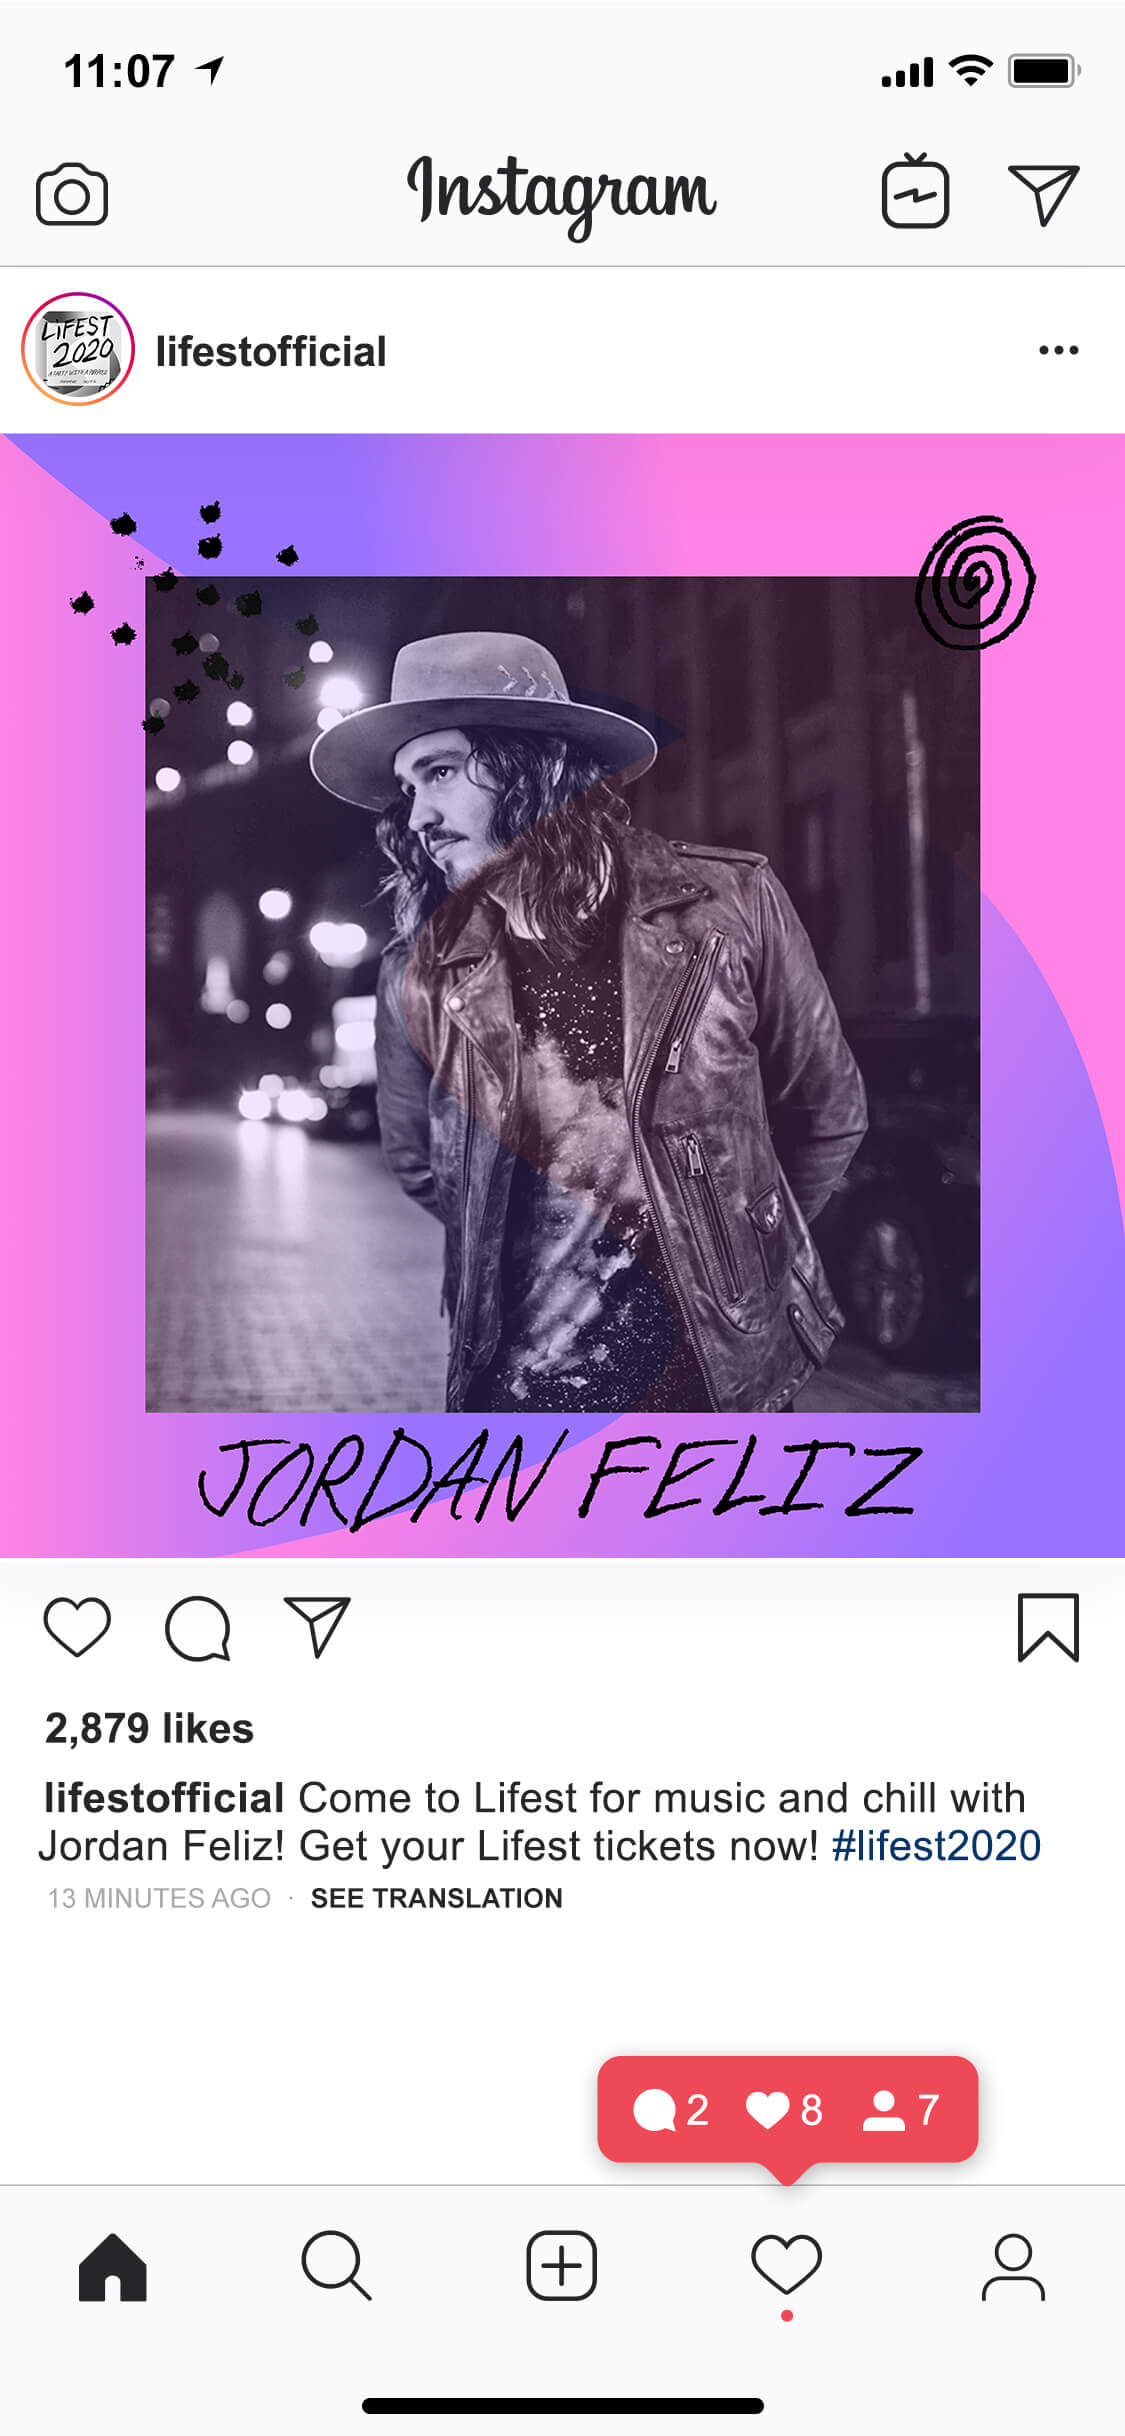 Lifest neon design Instagram post 6 mockup, featuring music artist Jordan Feliz